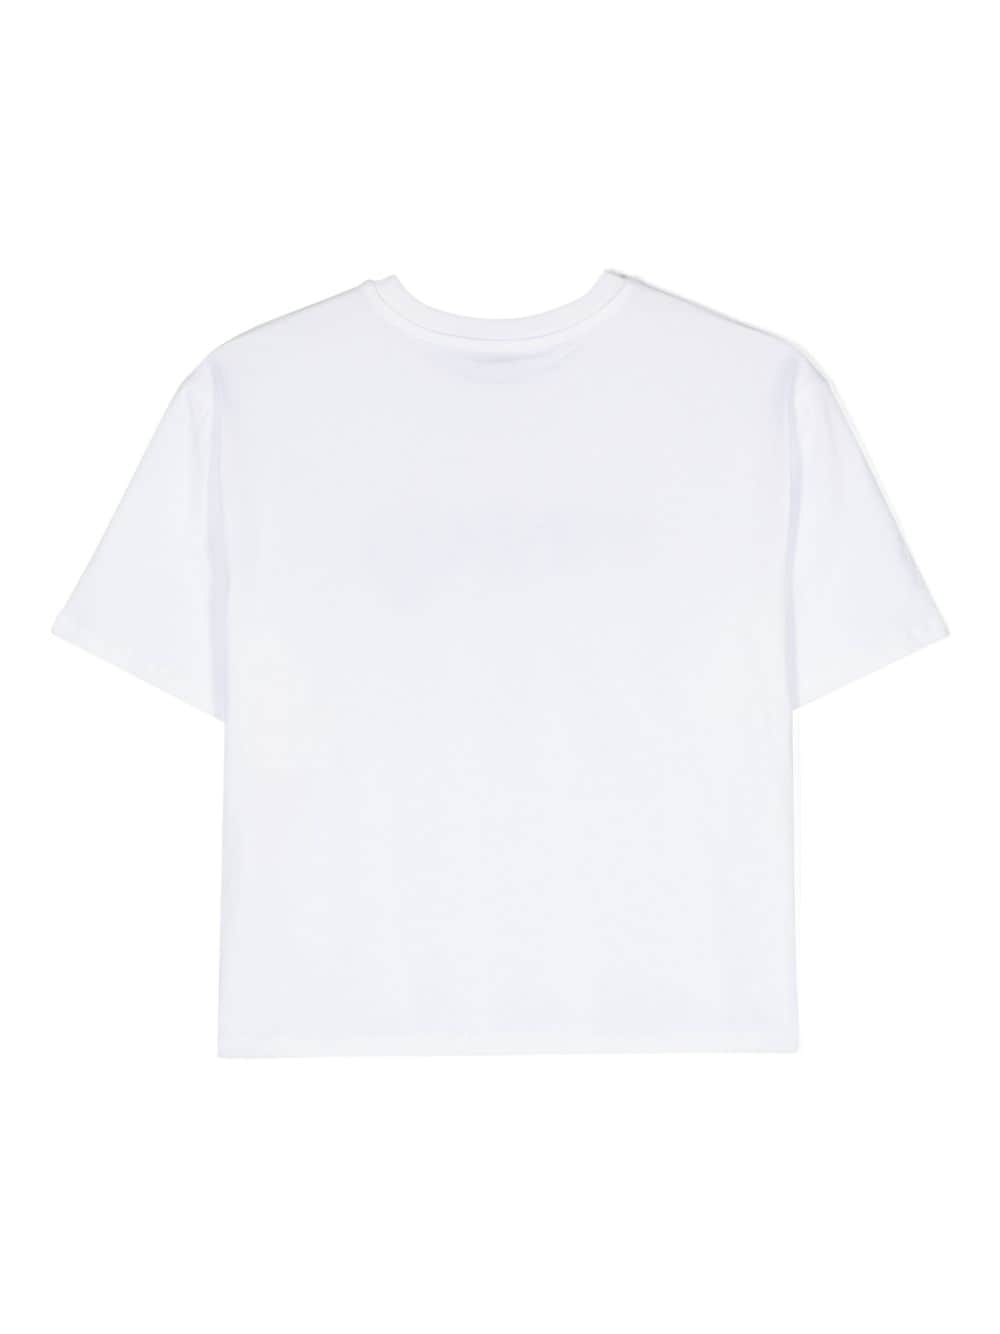 White t-shirt for girls with black logo